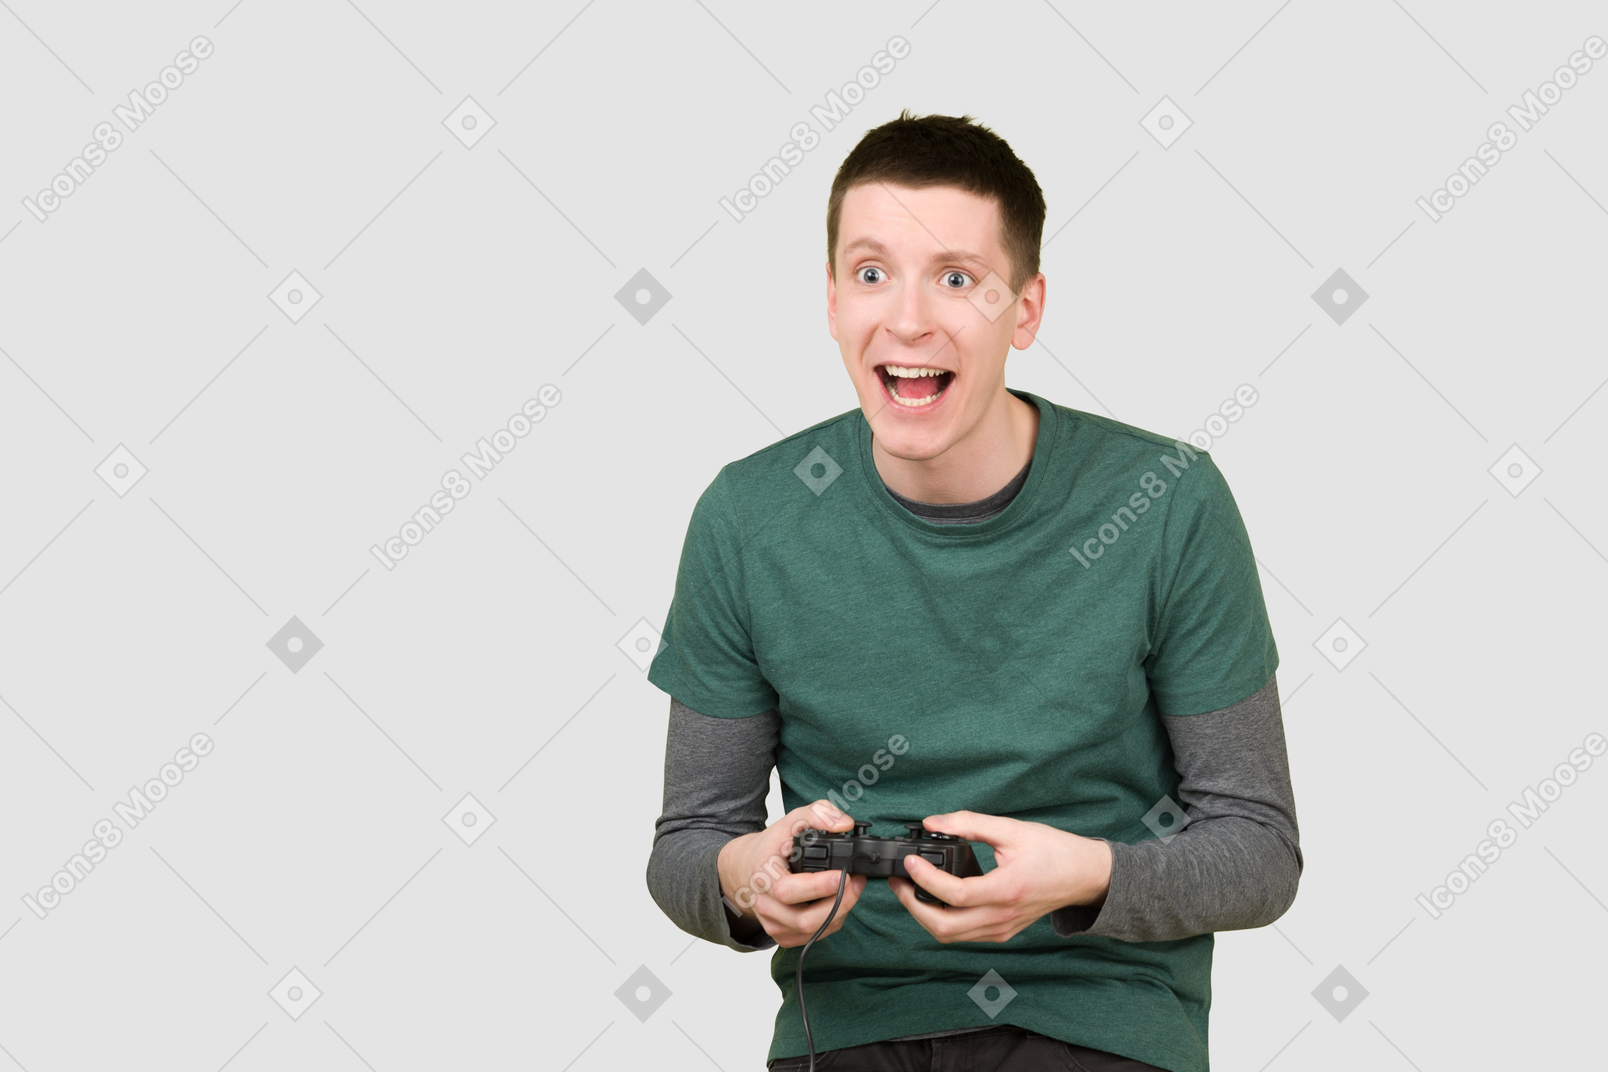 Emotional man playing a video game via gamepad